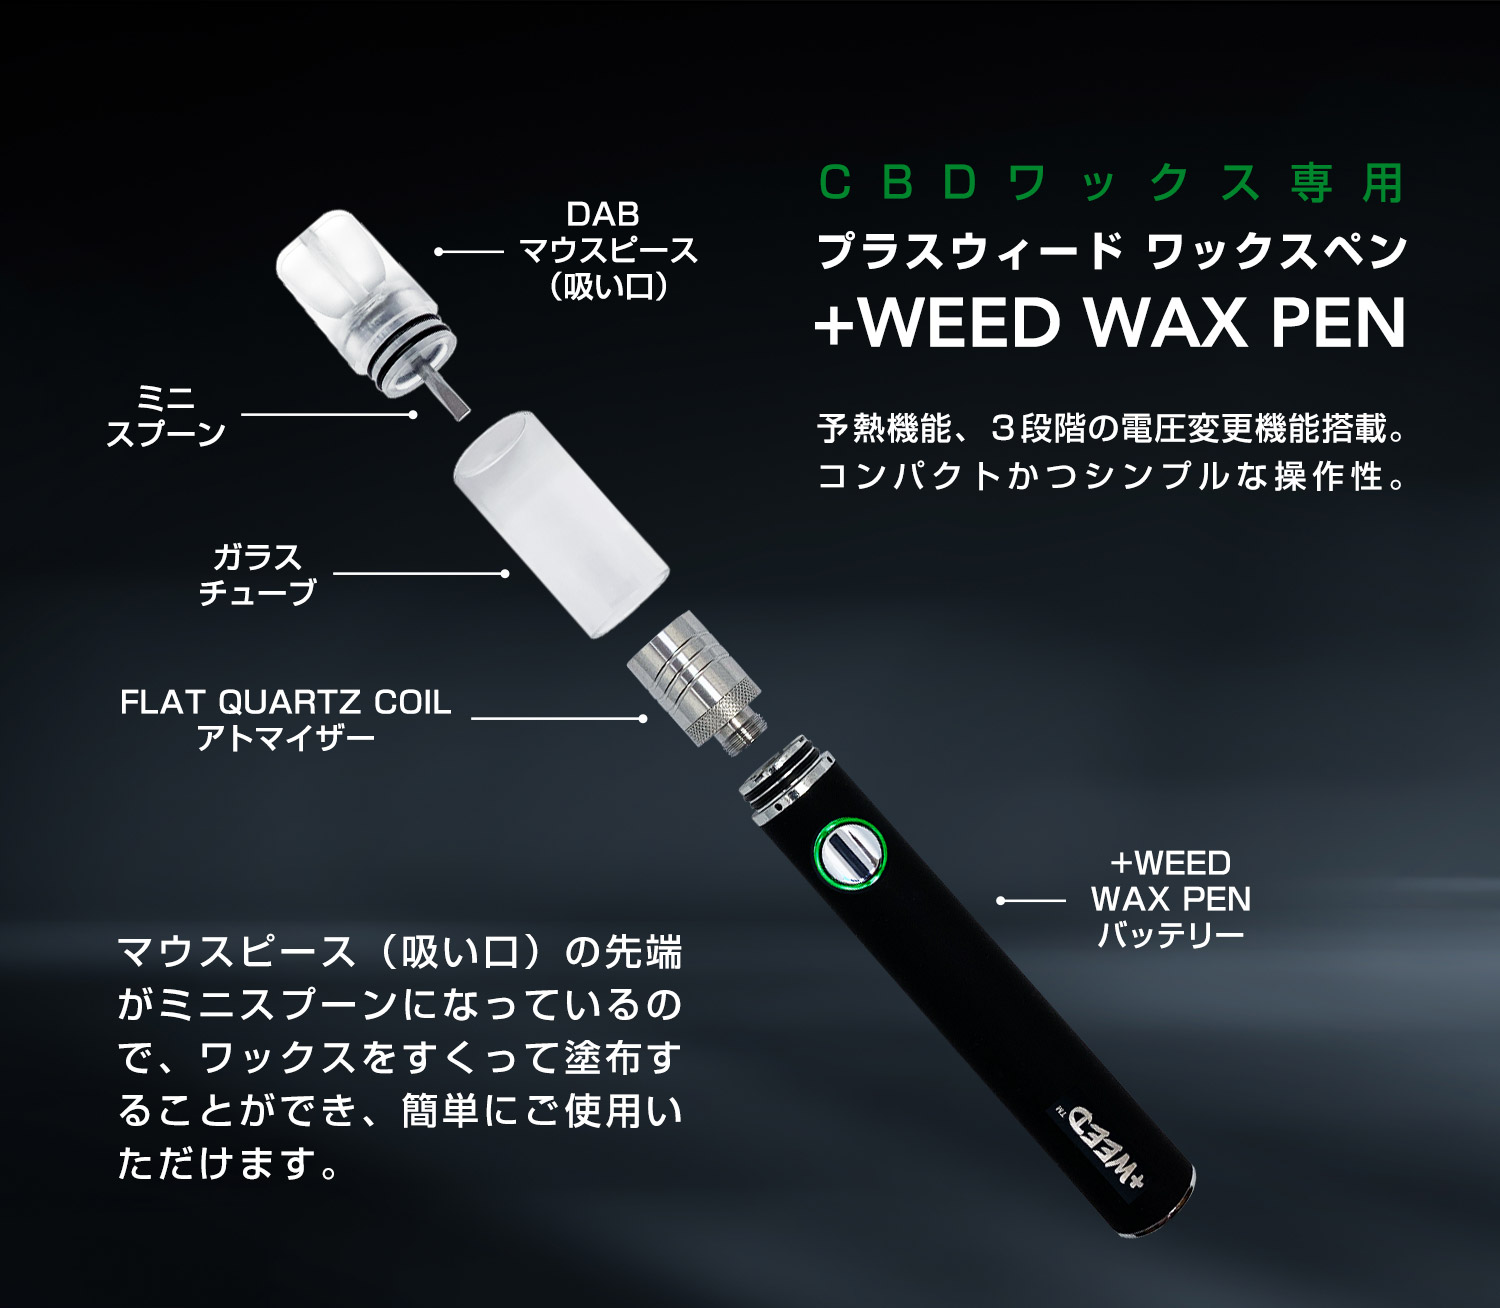 CBDワックス専用+WEED WAX PEN